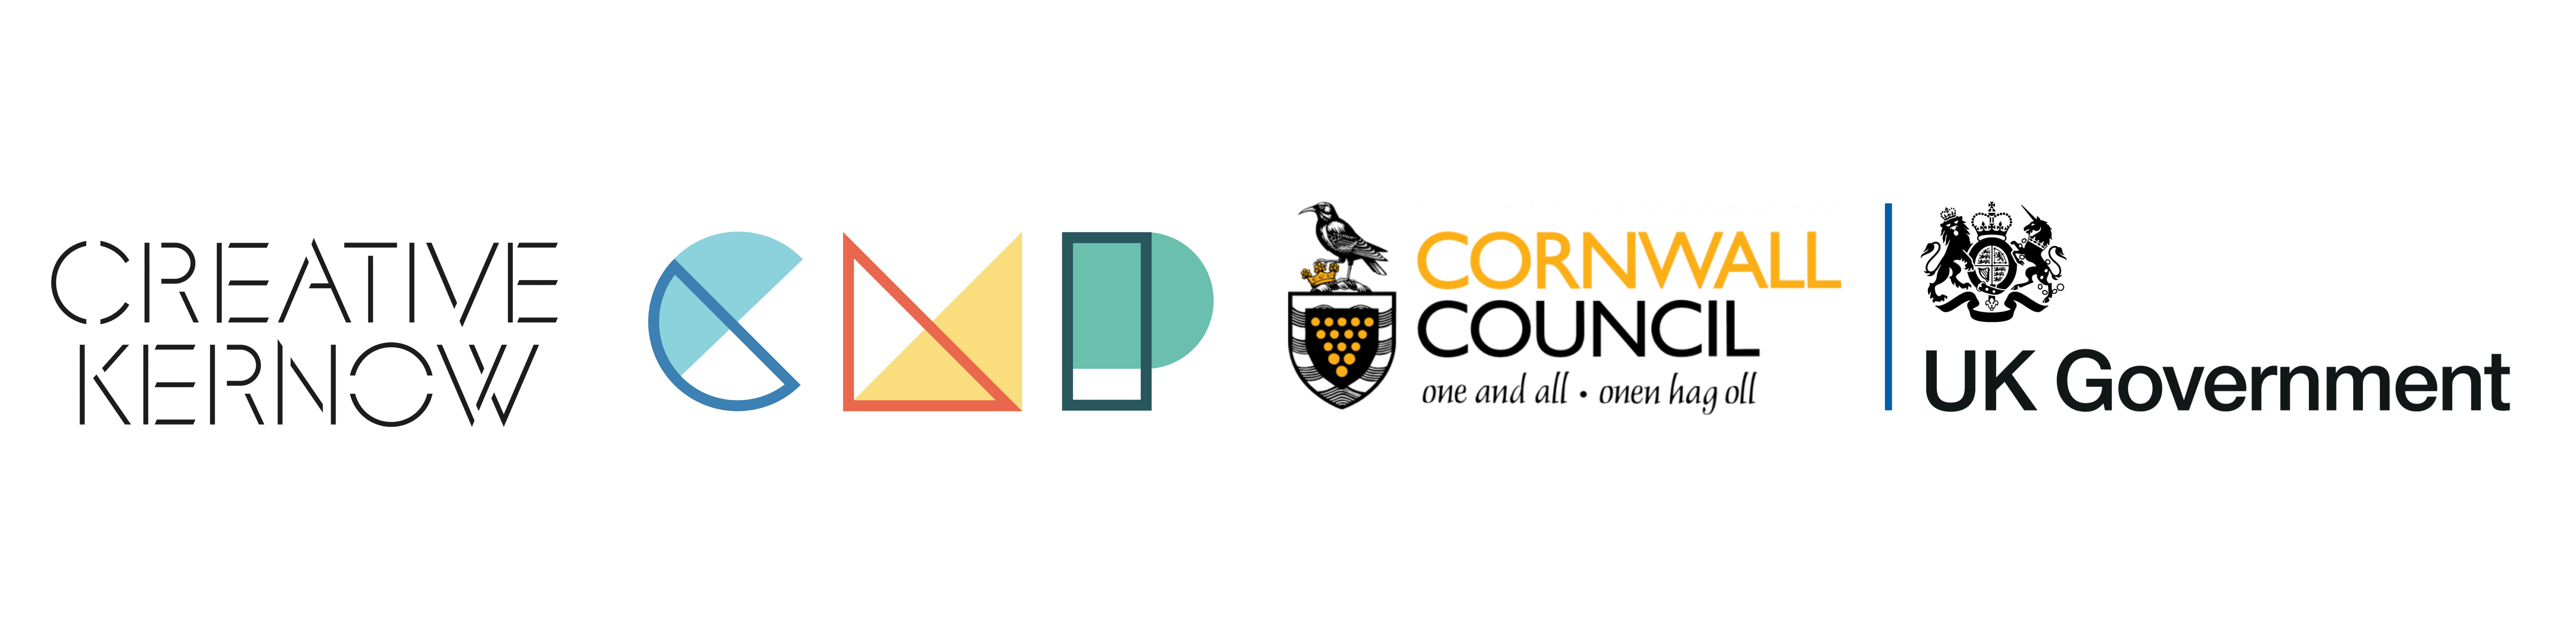 Funder Logos: Creative Kernow; CMP - Cornwall Museums Partnership; Cornwall Council; UK Government.